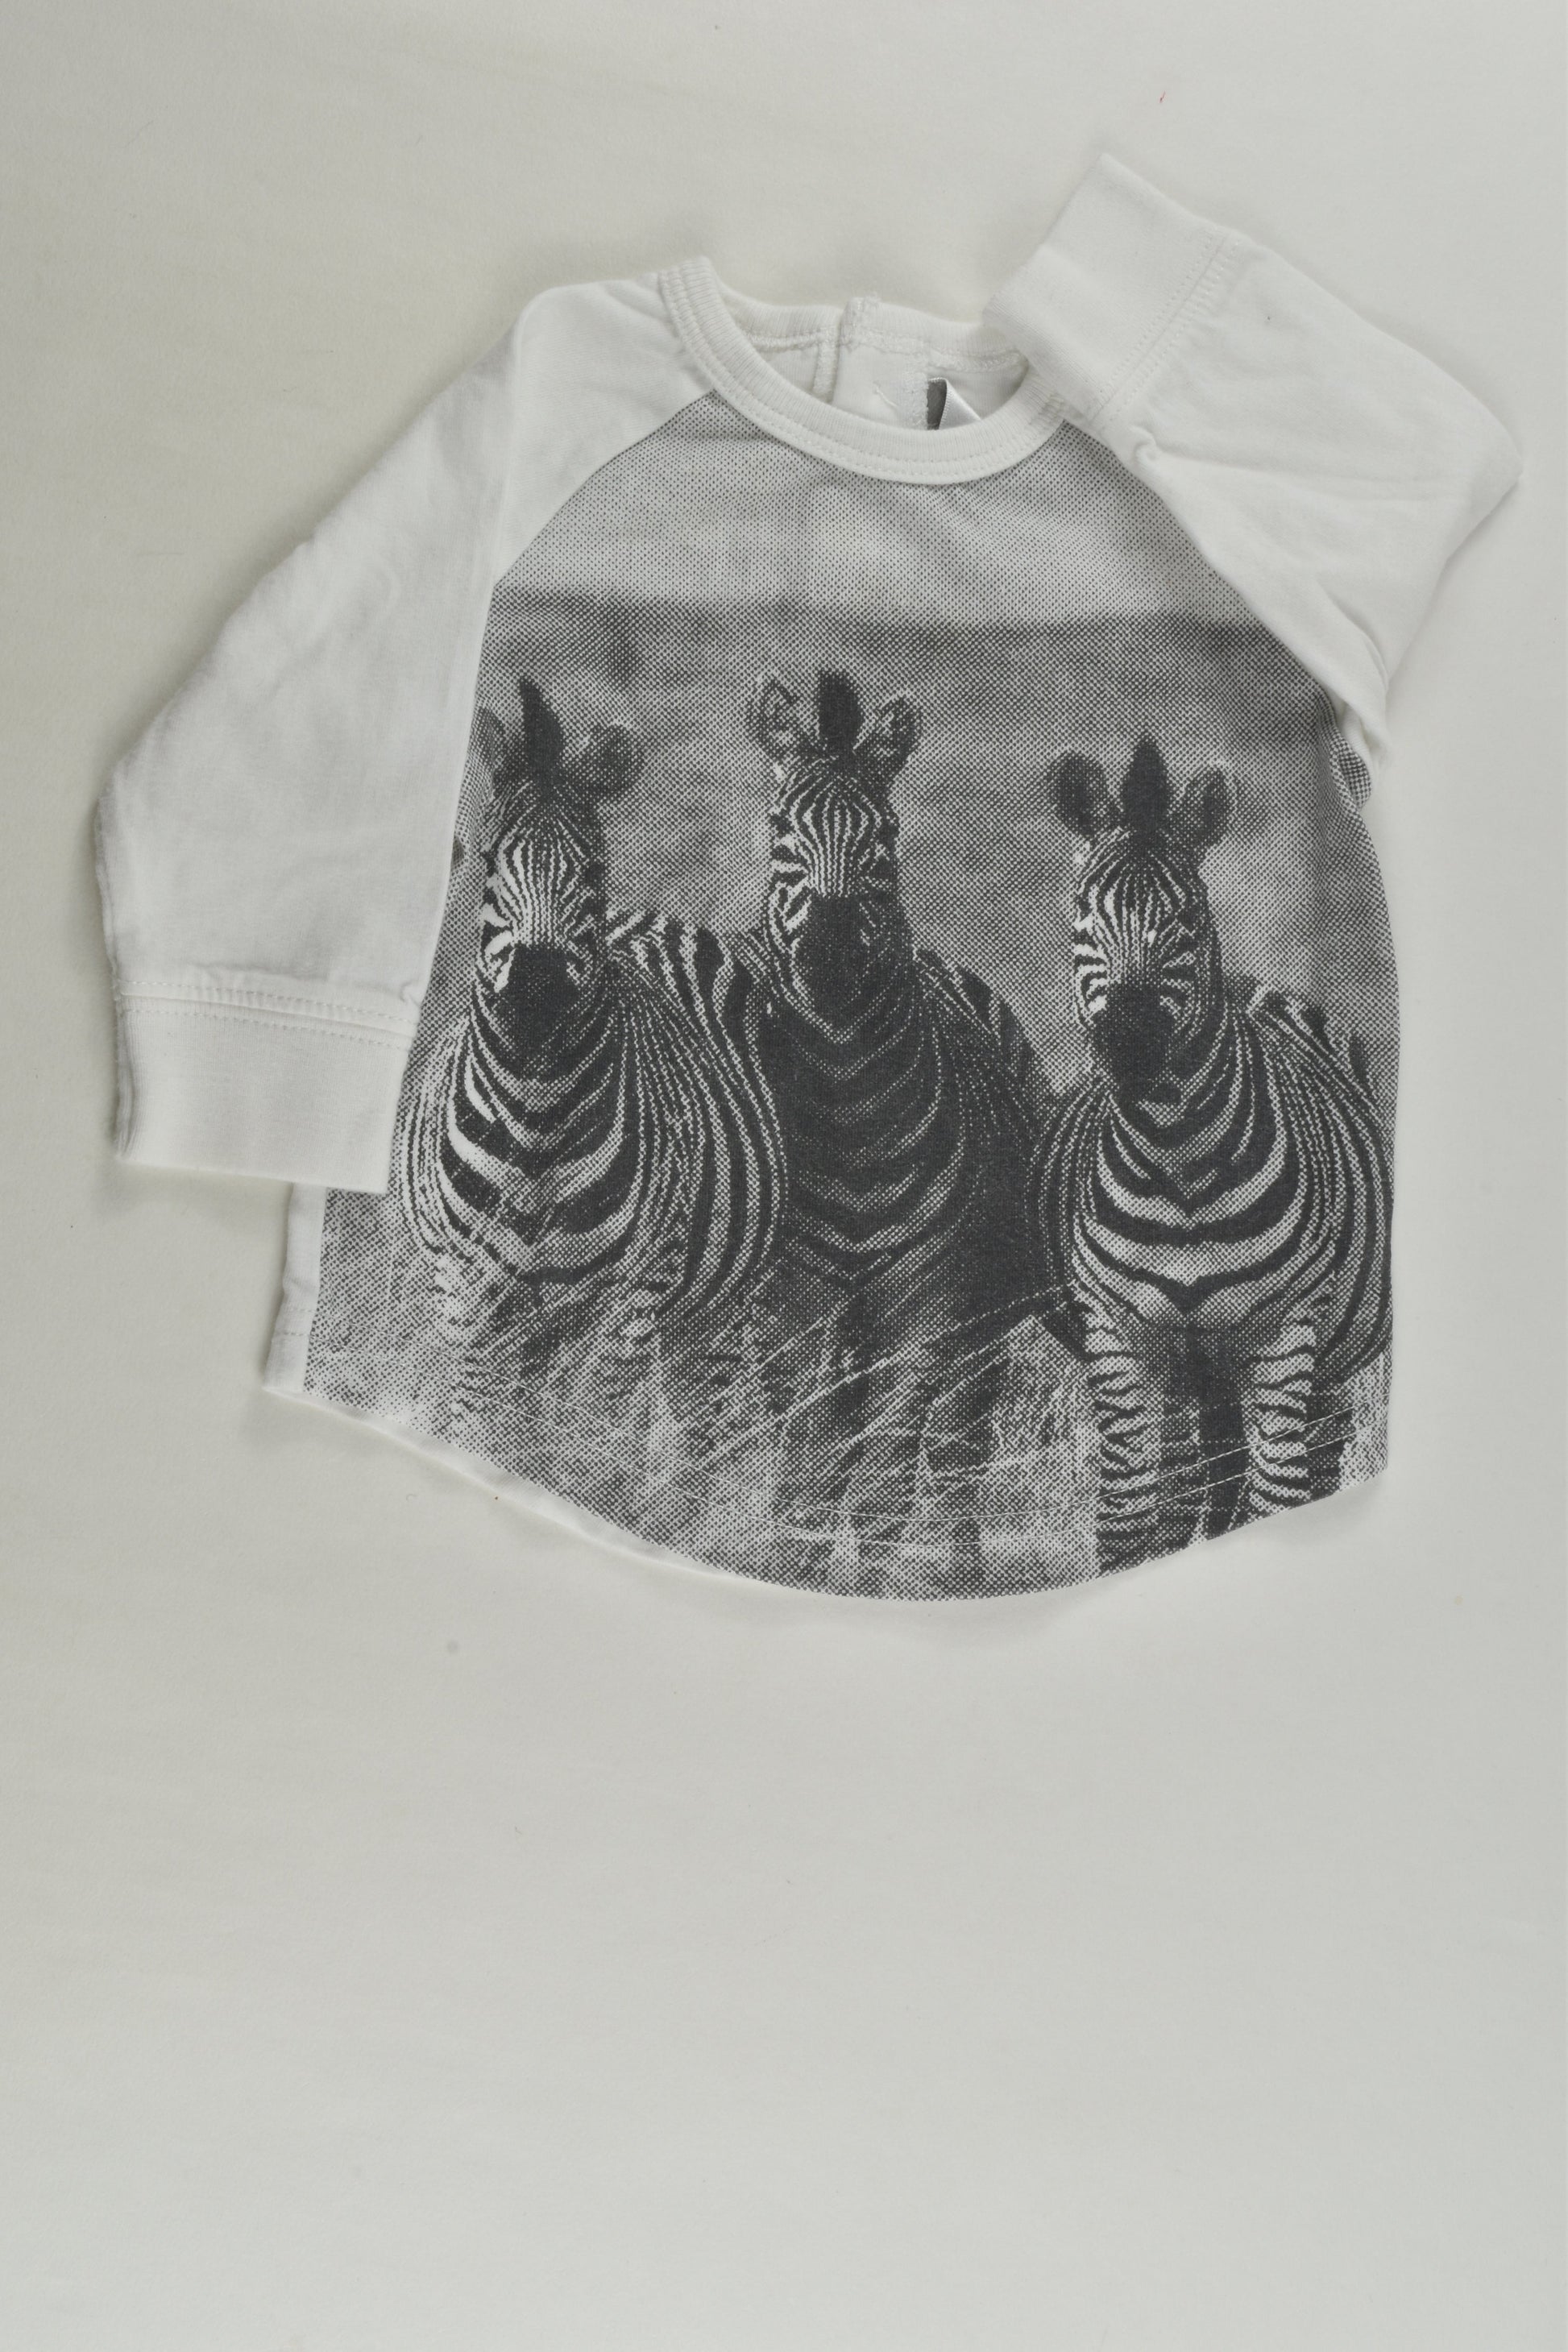 Bébé by Minihaha Size 00 (6 months) Zebra Top